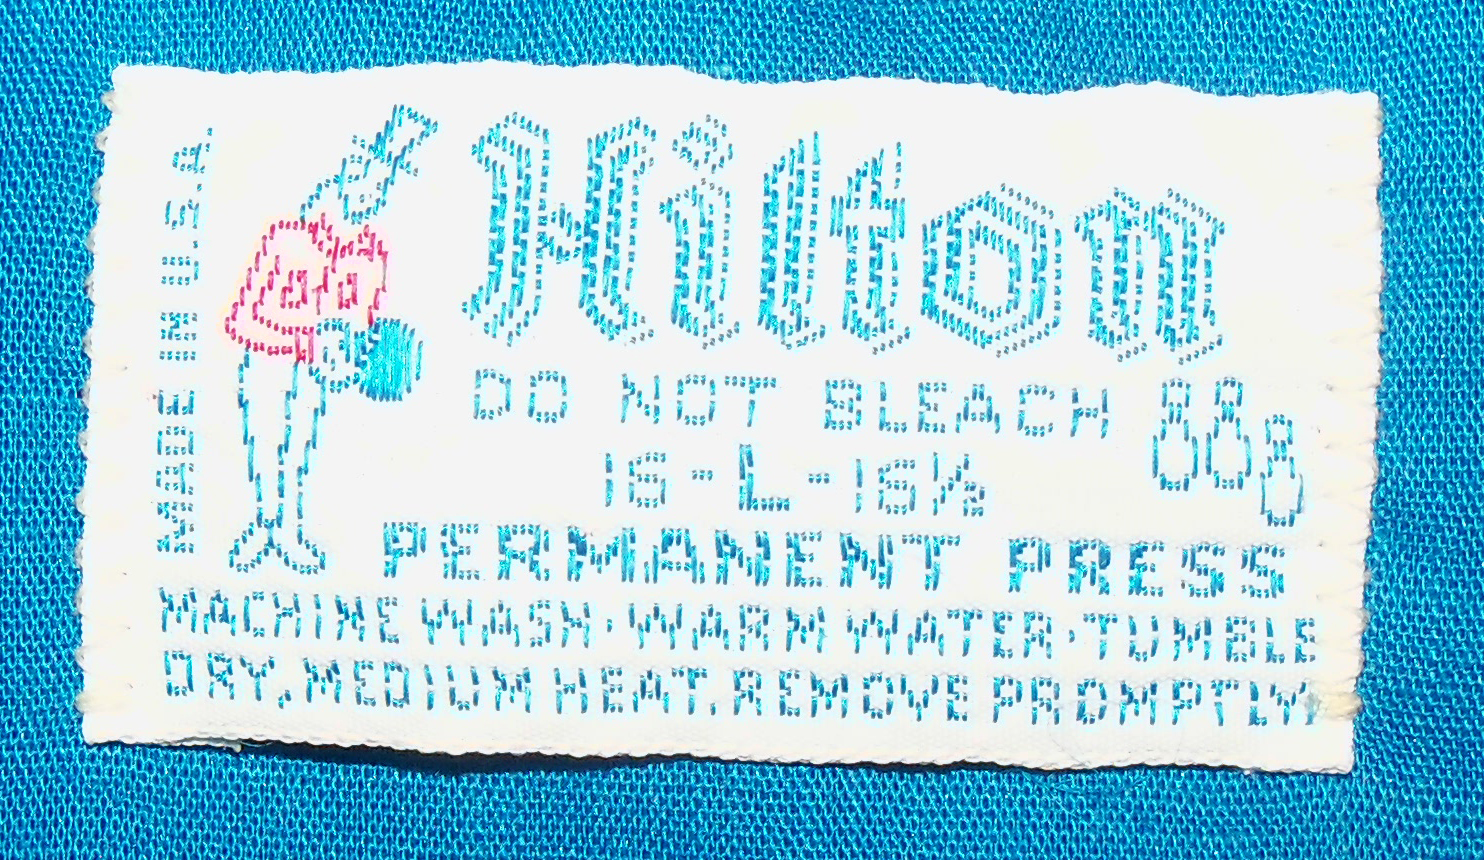 from an early 1970s shirt - Courtesy of pinkyagogo